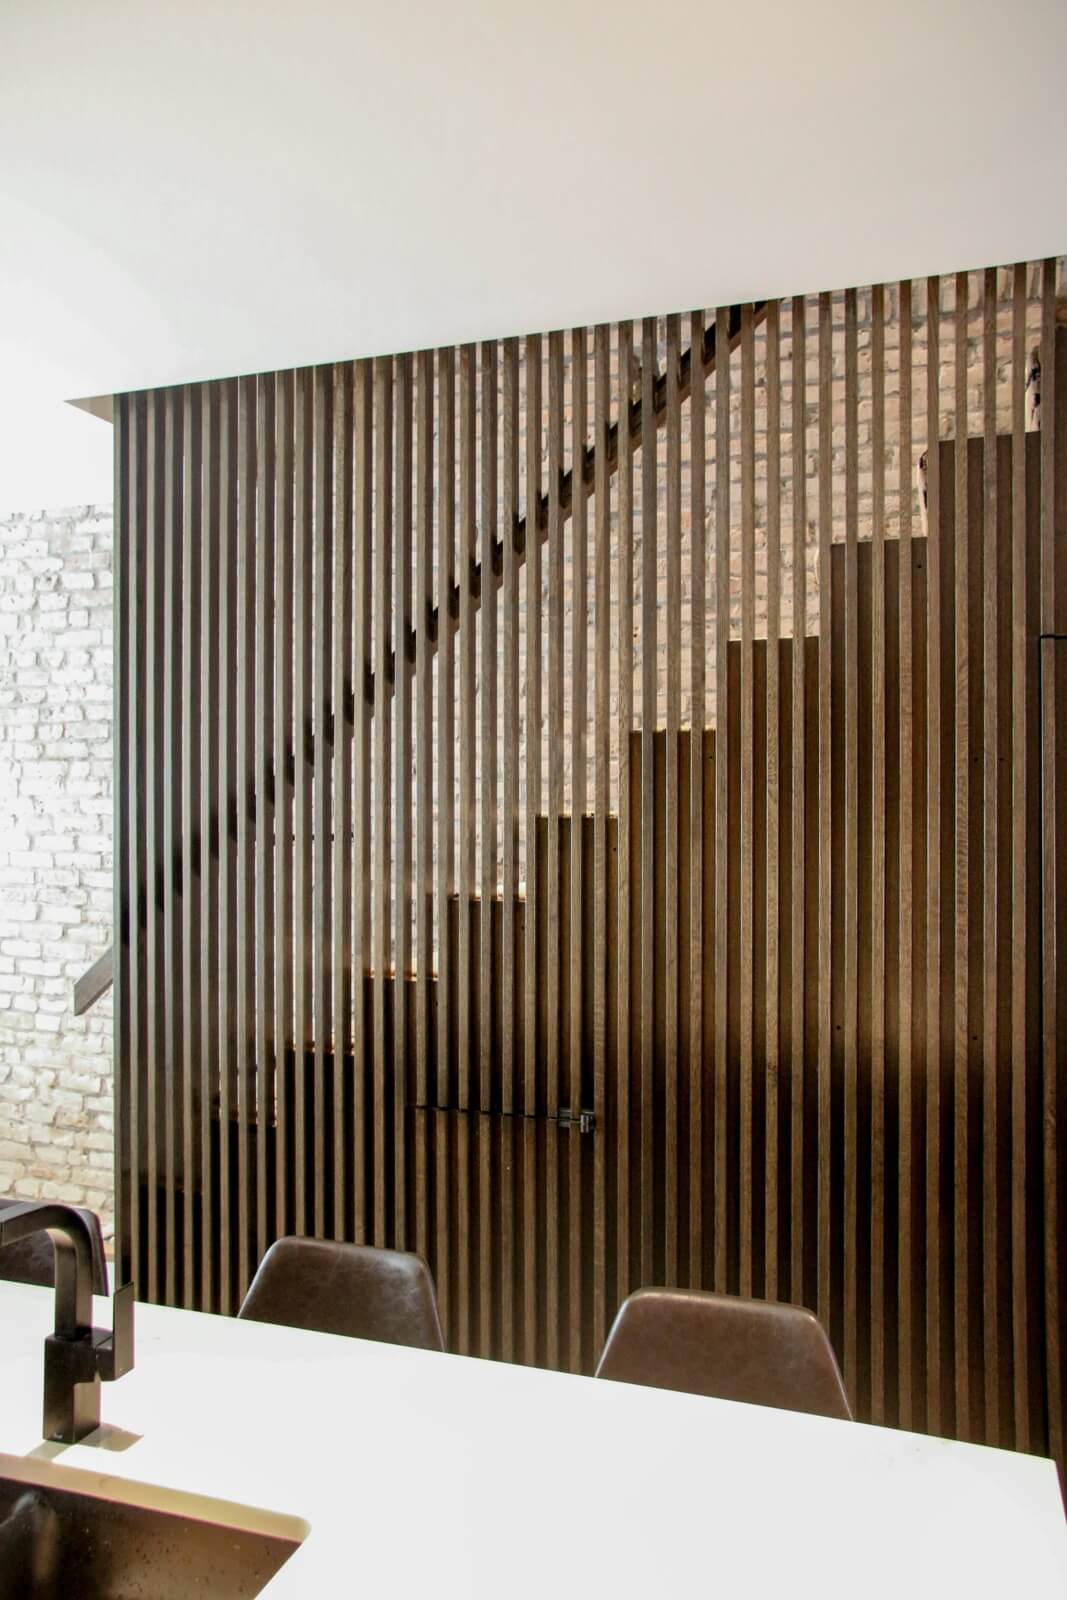 Interior Design Ideas Brooklyn Rebuild Workshop South Slope